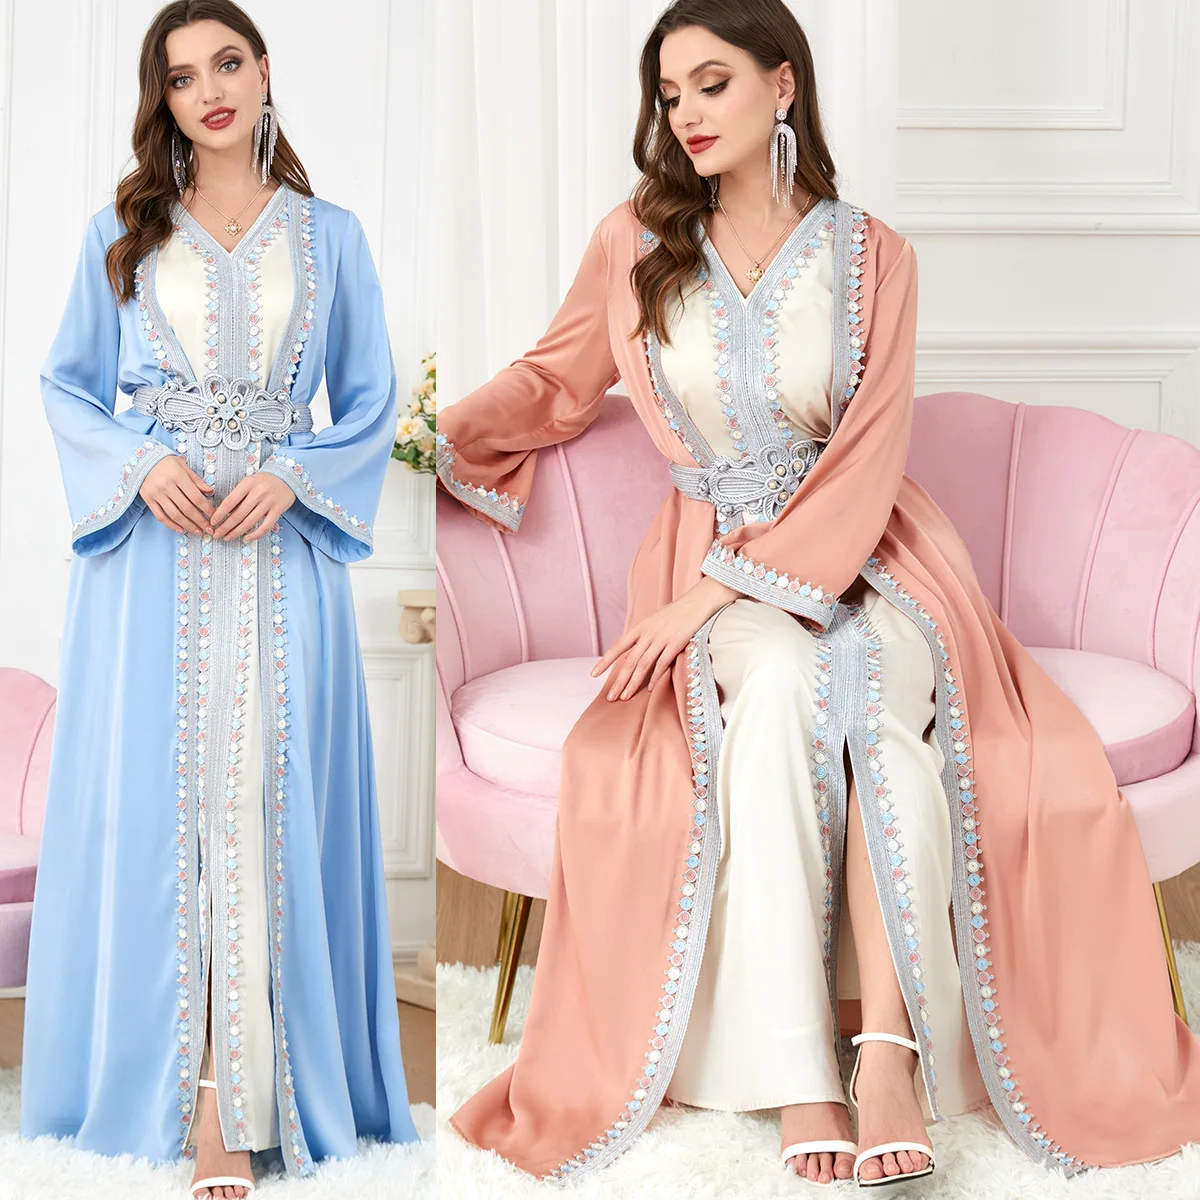 

V-neck Slit Women Dress Muslim Set Abaya Party Dubai Robes Turkey Islam Long Evening Dresses Arabia Musulmane Elegant Vestido